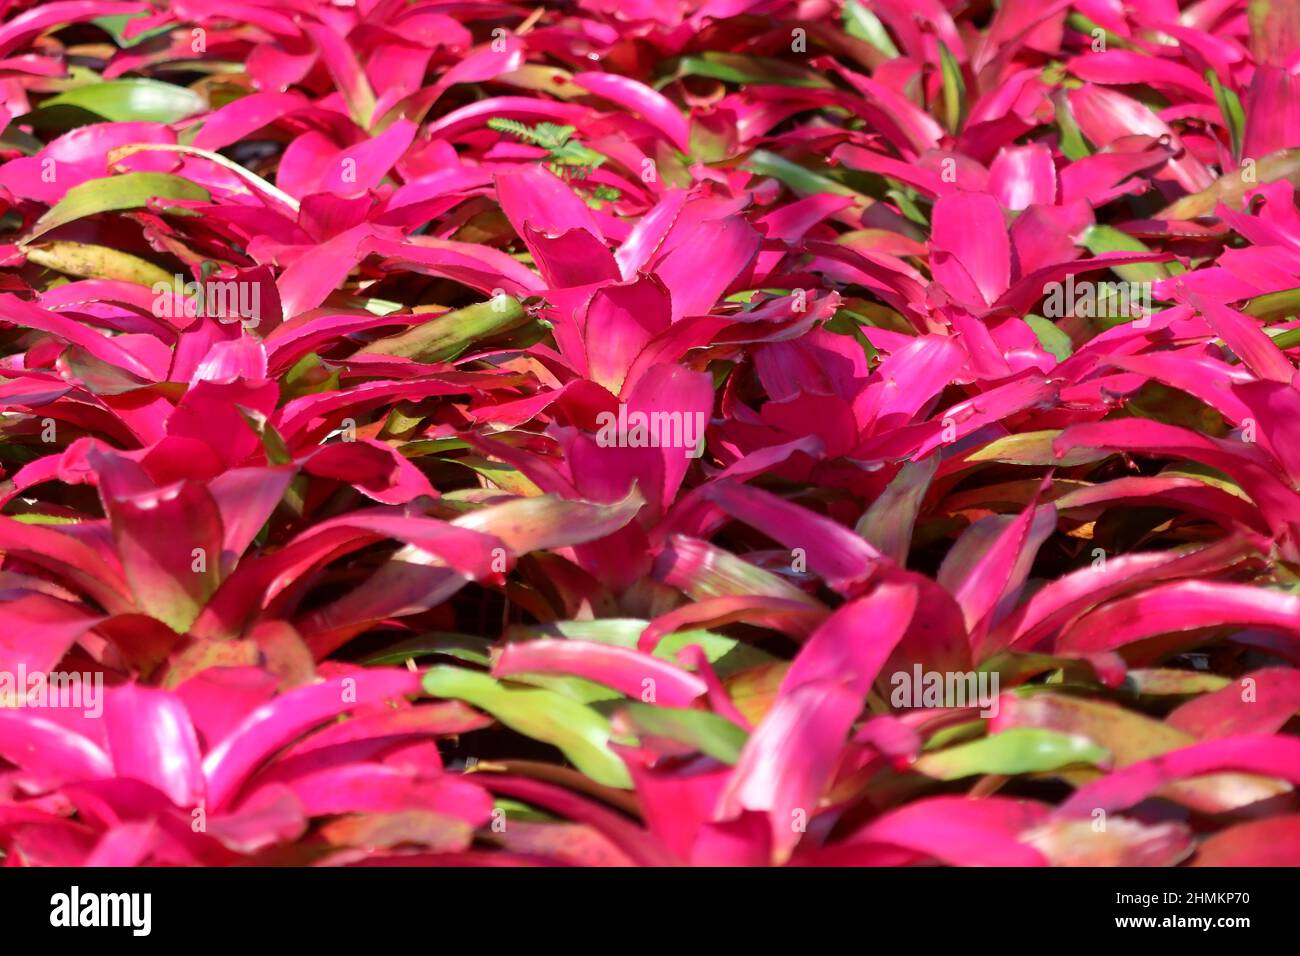 photo of bromeliad guzmania magnifica flower in garden Stock Photo